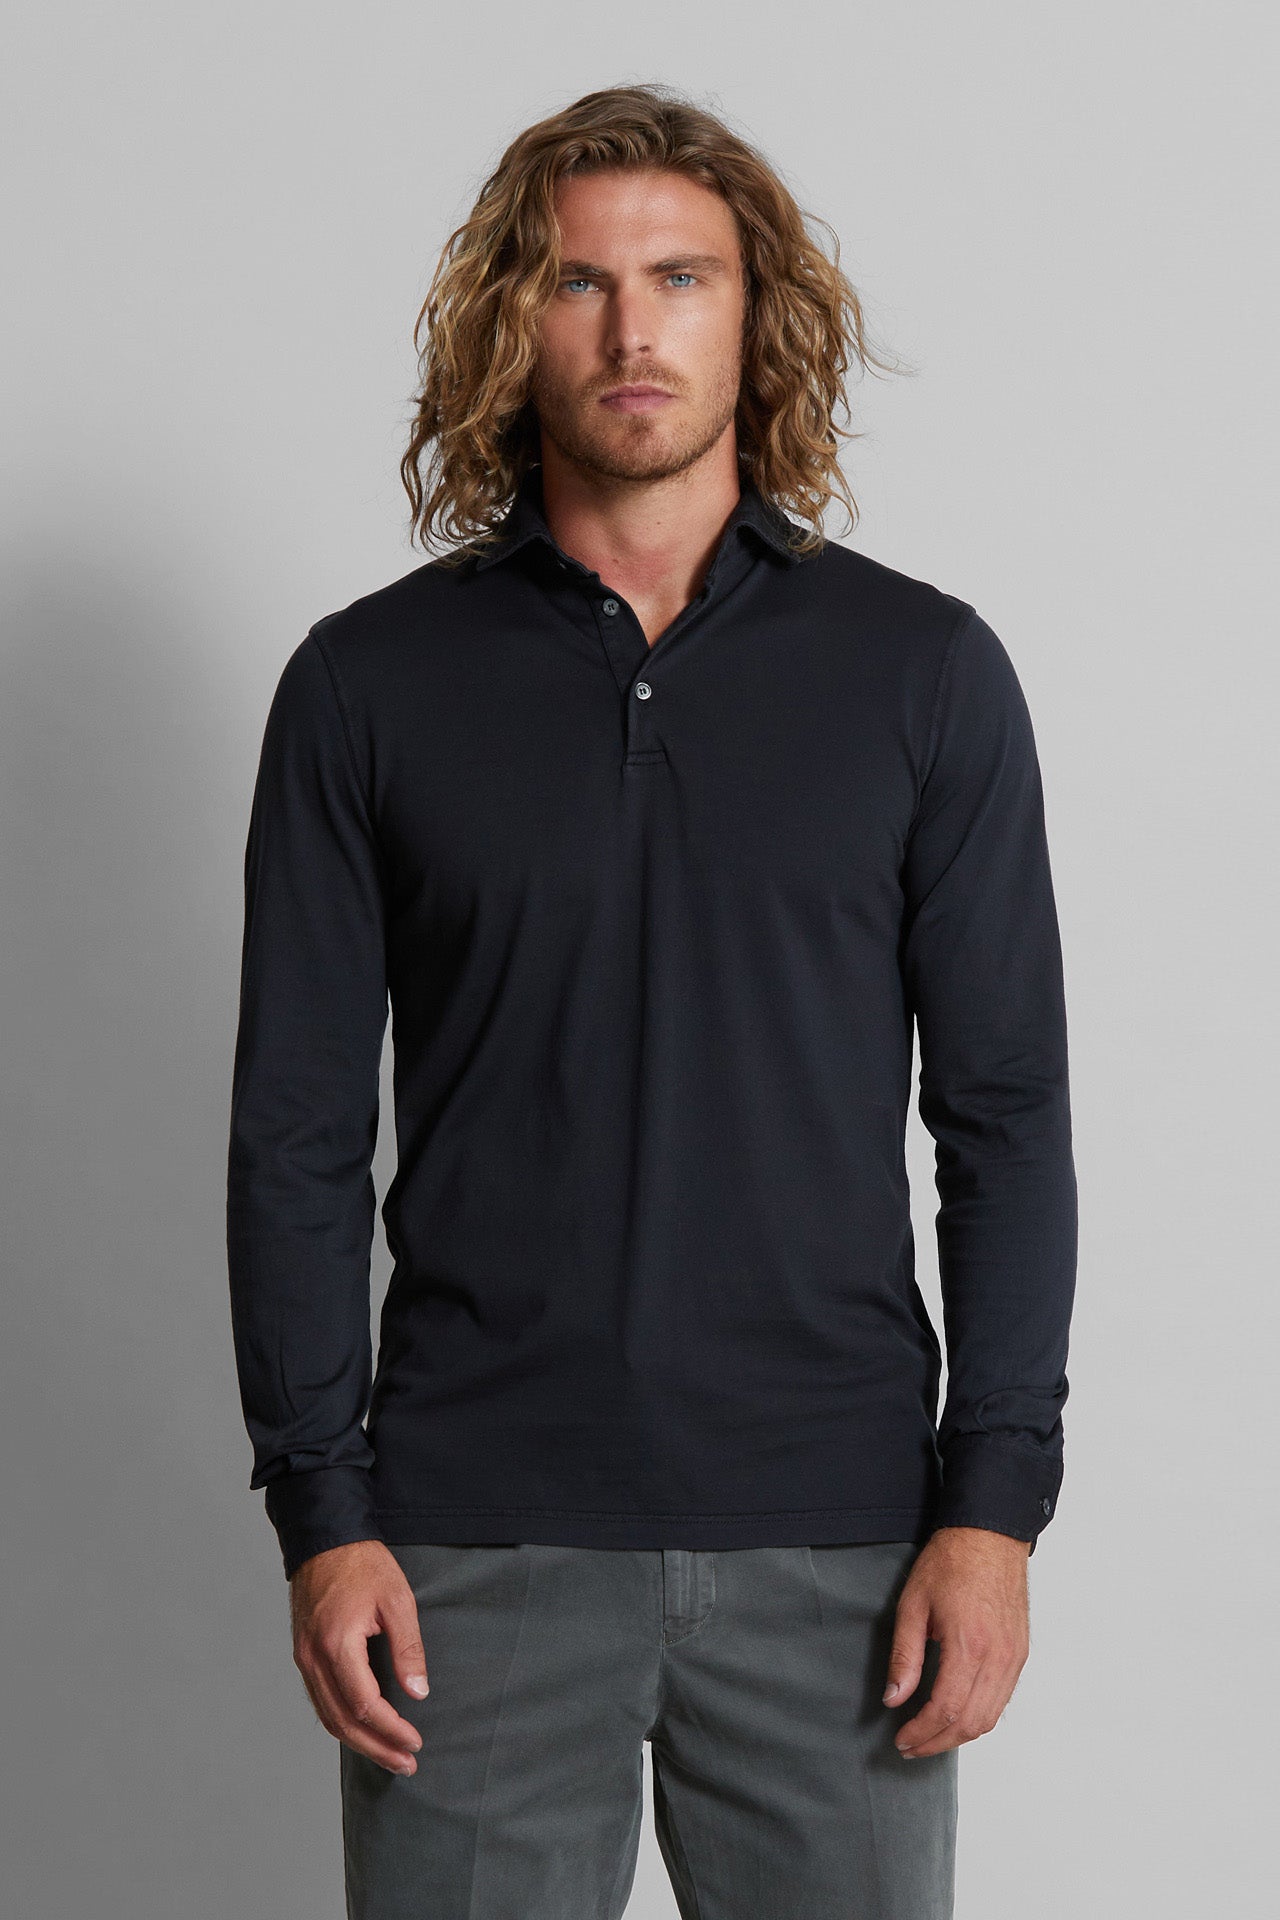 Zero the organic cotton long sleeves polo shirt